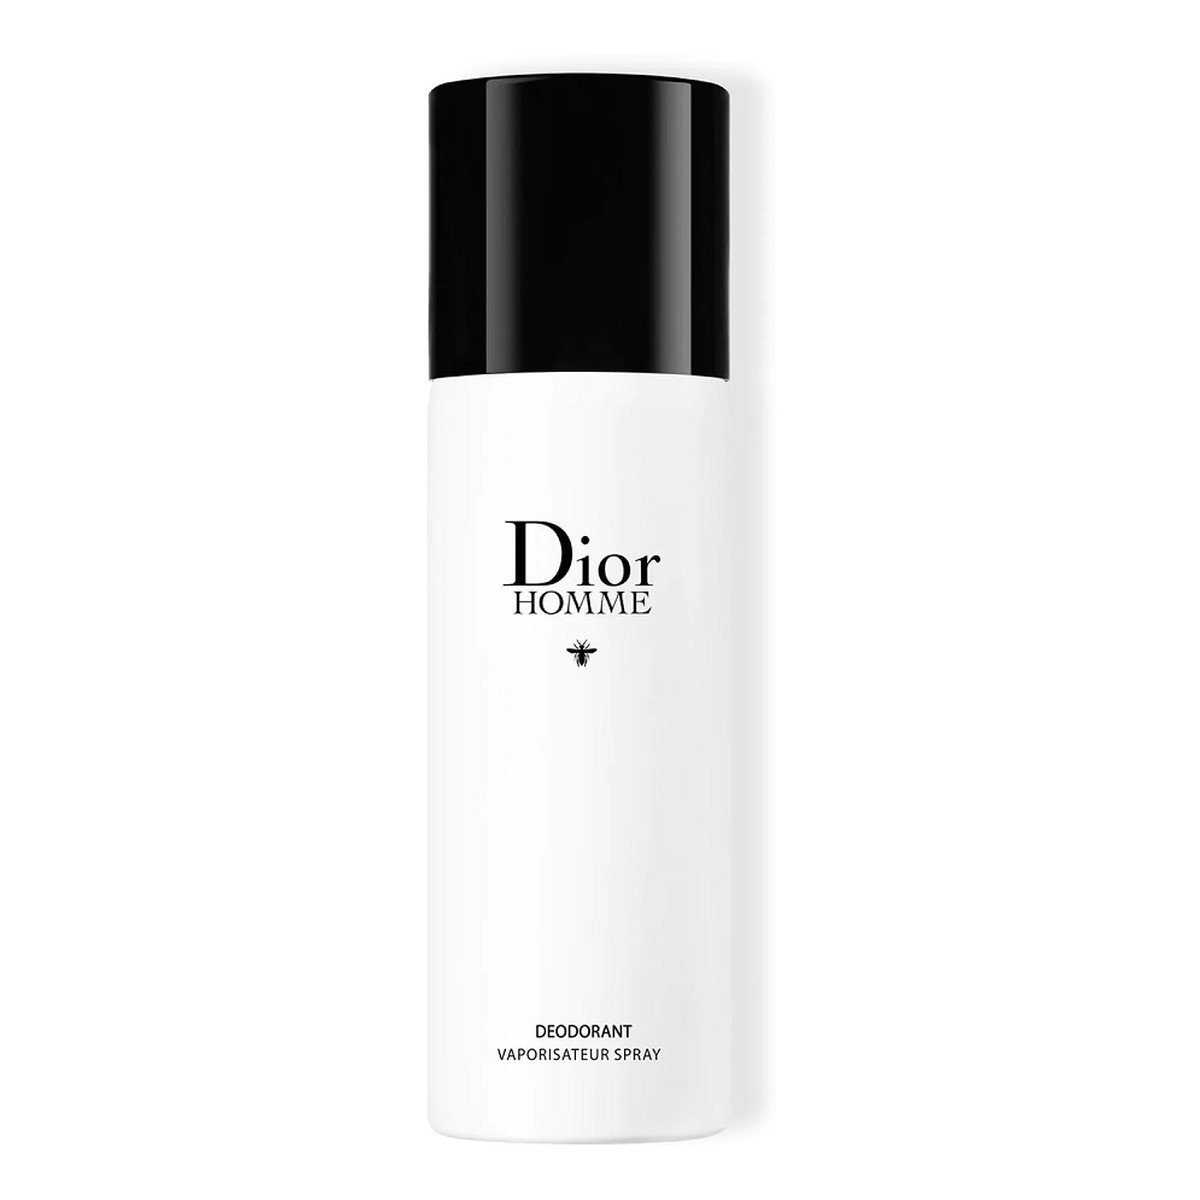 Dior Homme dezodorant spray 150ml